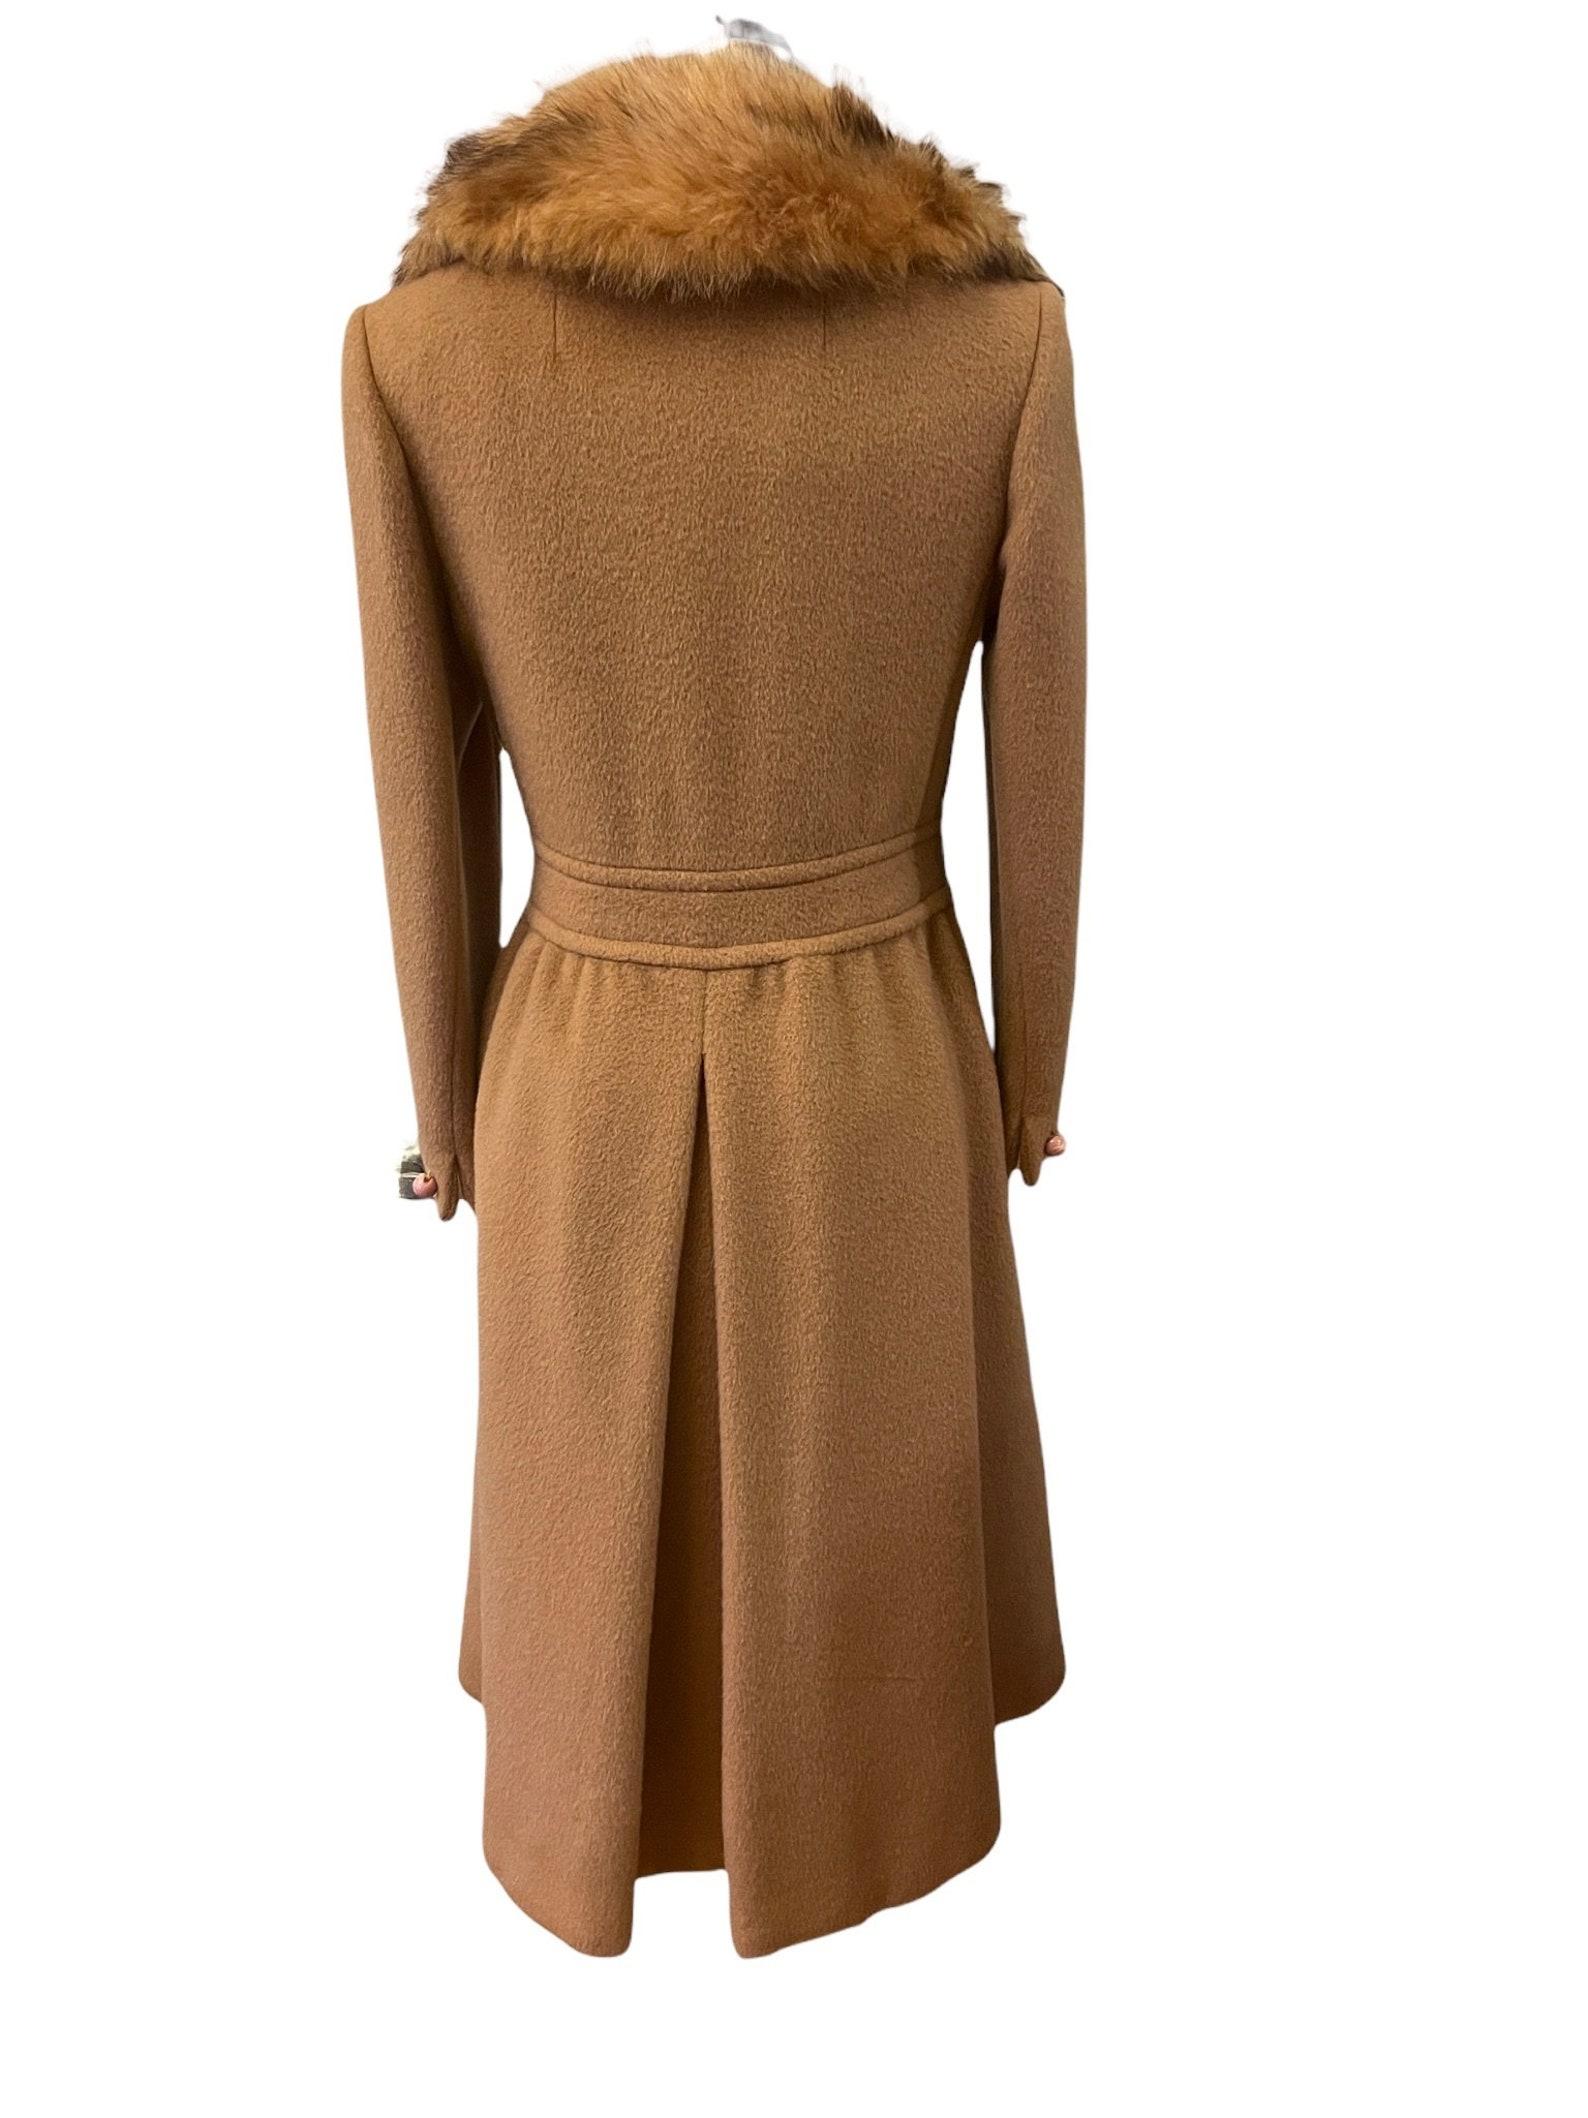 Pierre Cardin Wool Princess Coat with Fox Fur Collar, Circa 1970s For Sale 2